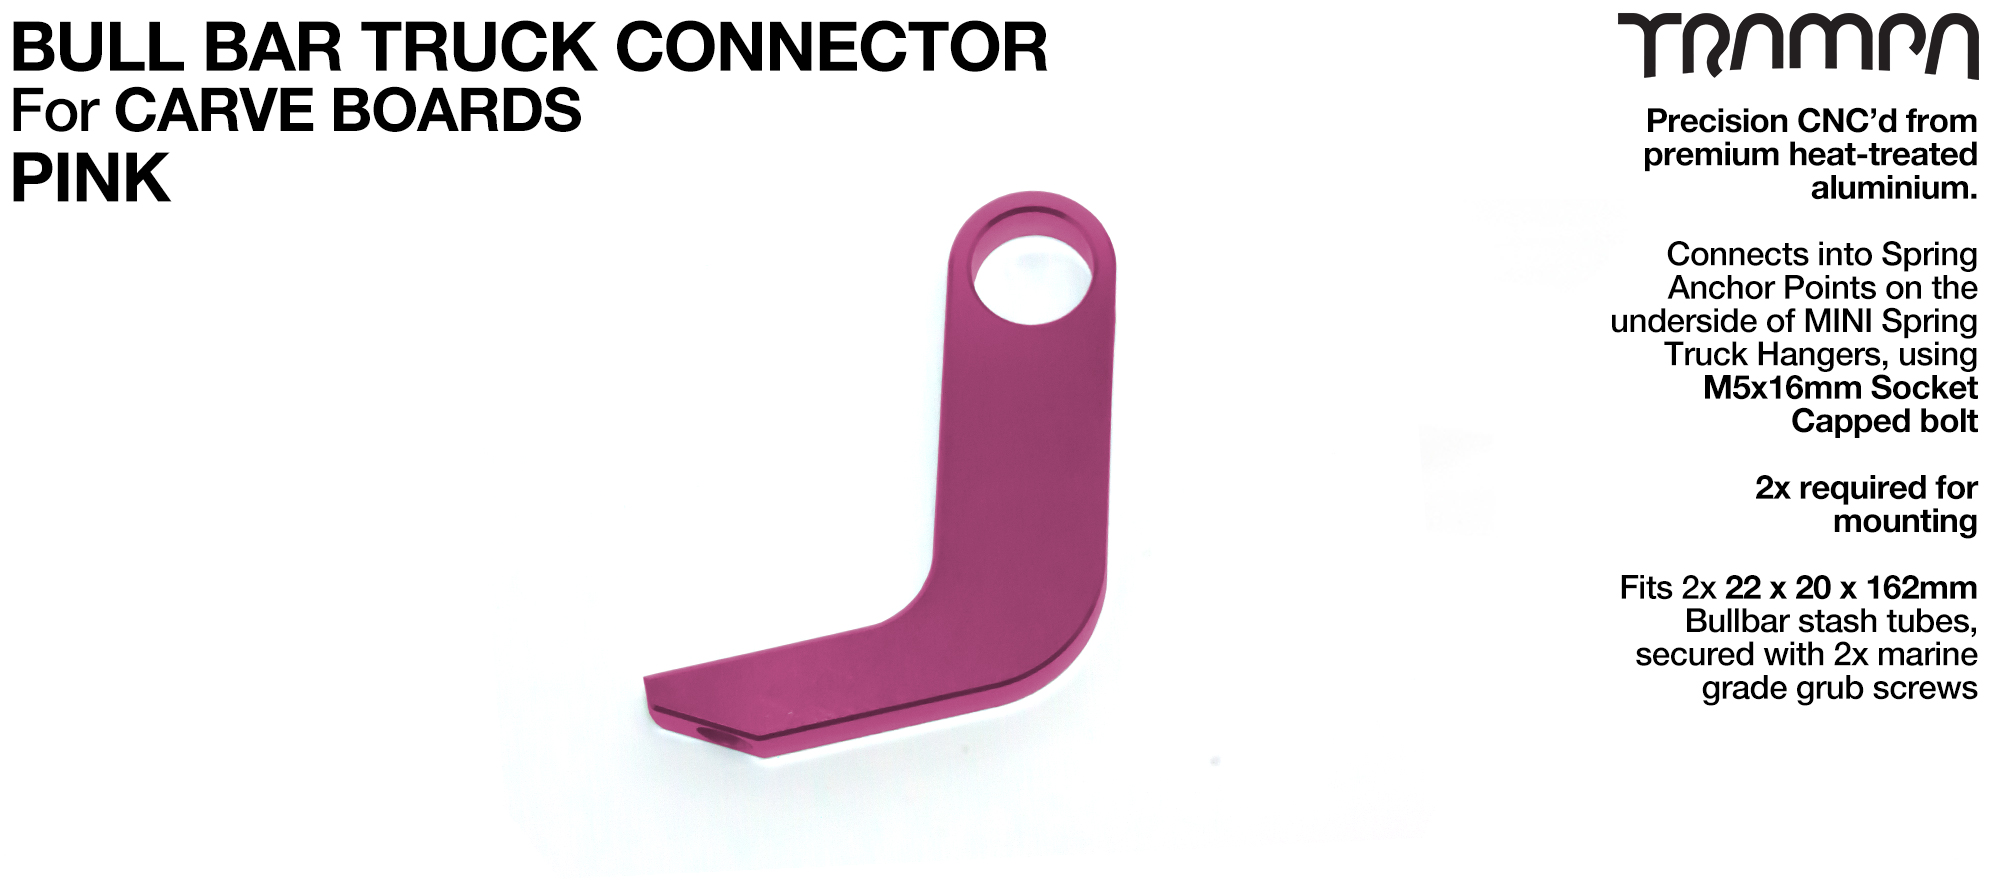 Carve Board Bull Bar connector - PINK 